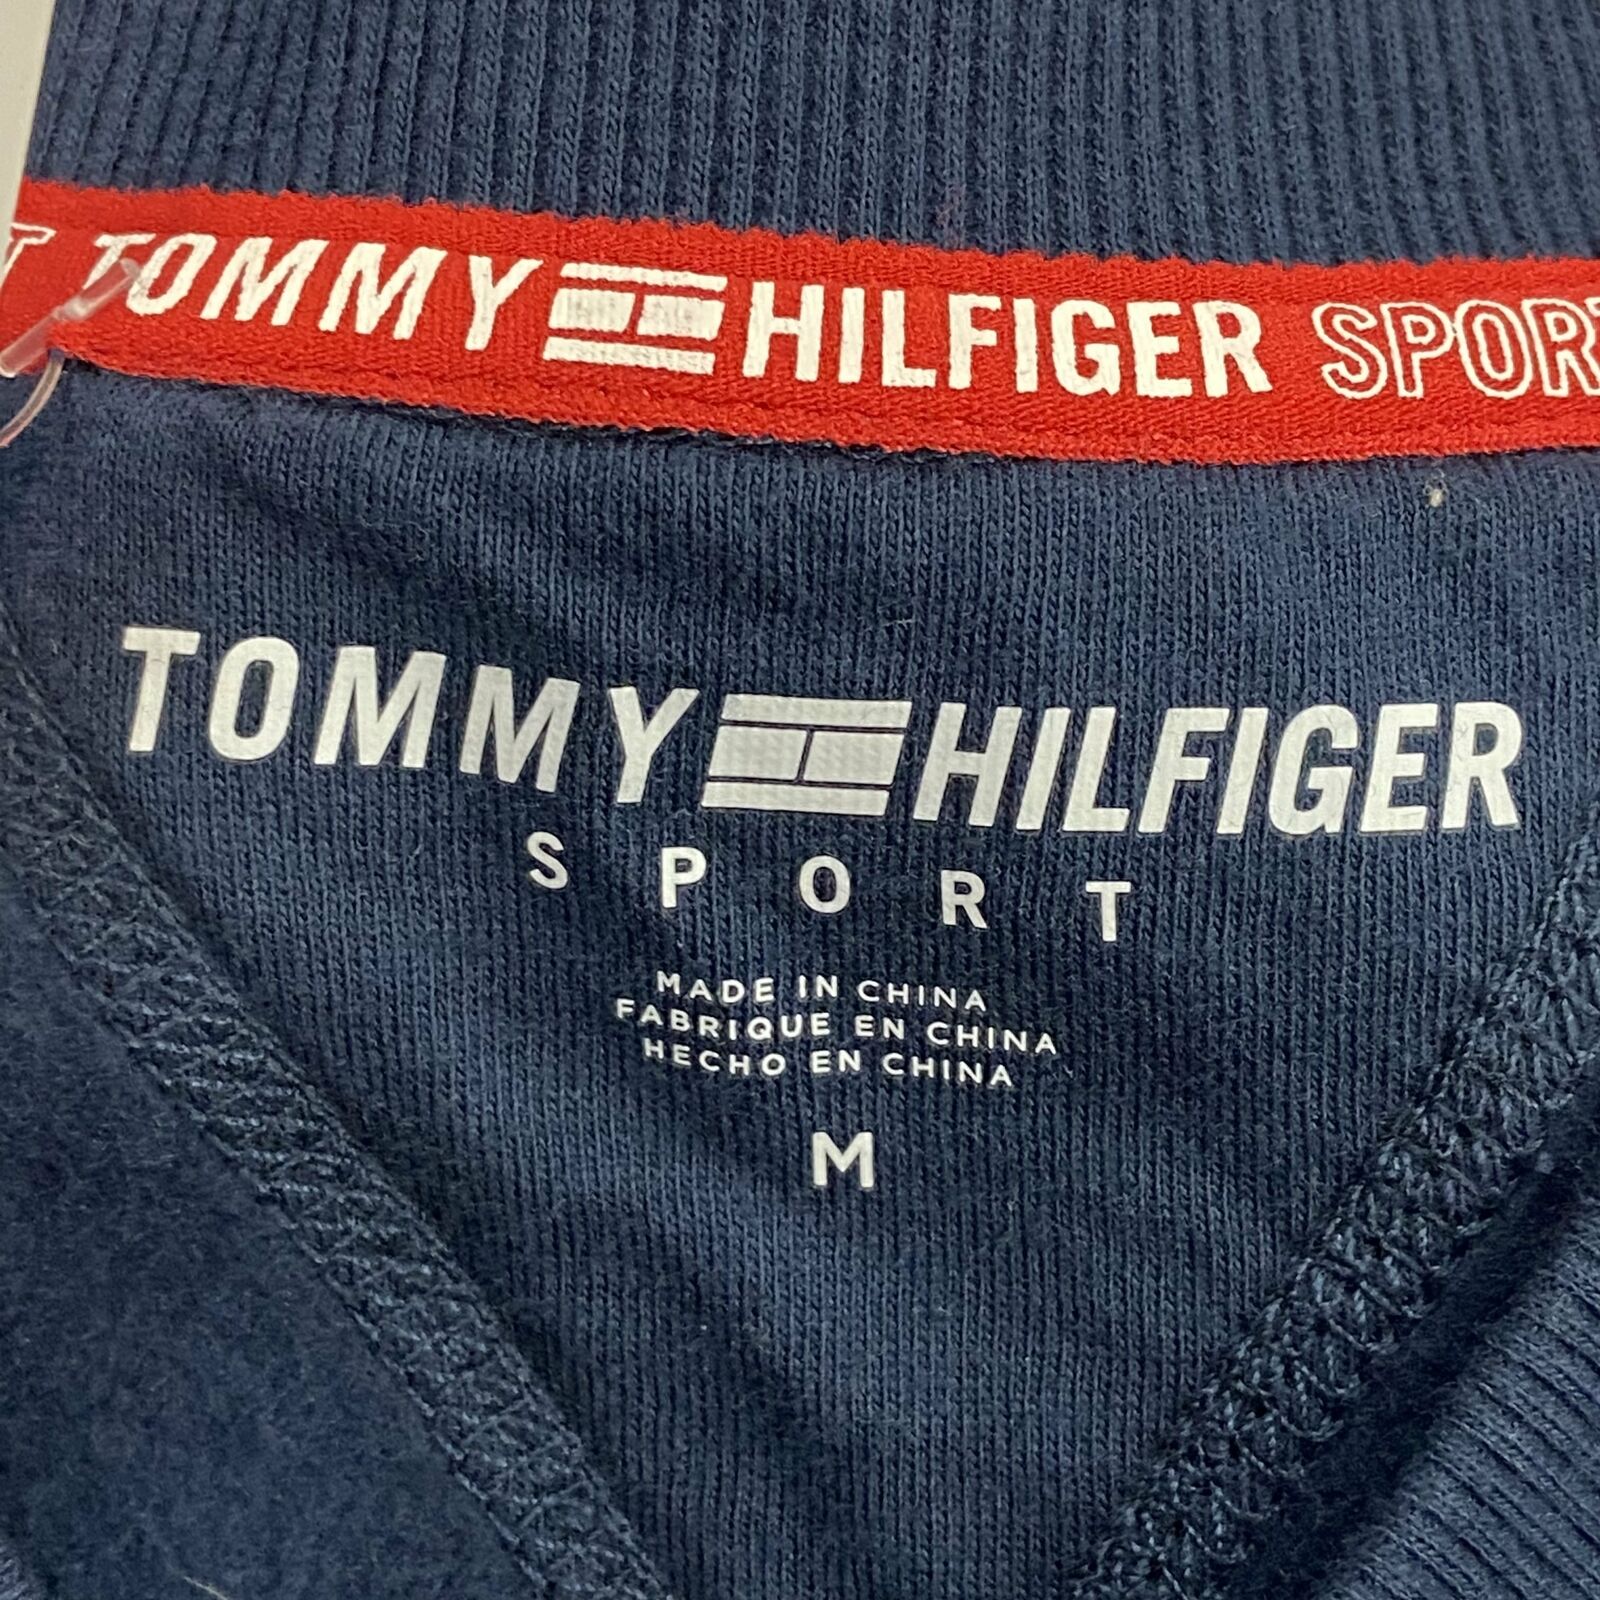 Hilfiger - Dress Tunic exchange Sport beyond Size Navy Women\'s Sweater Medium Tommy